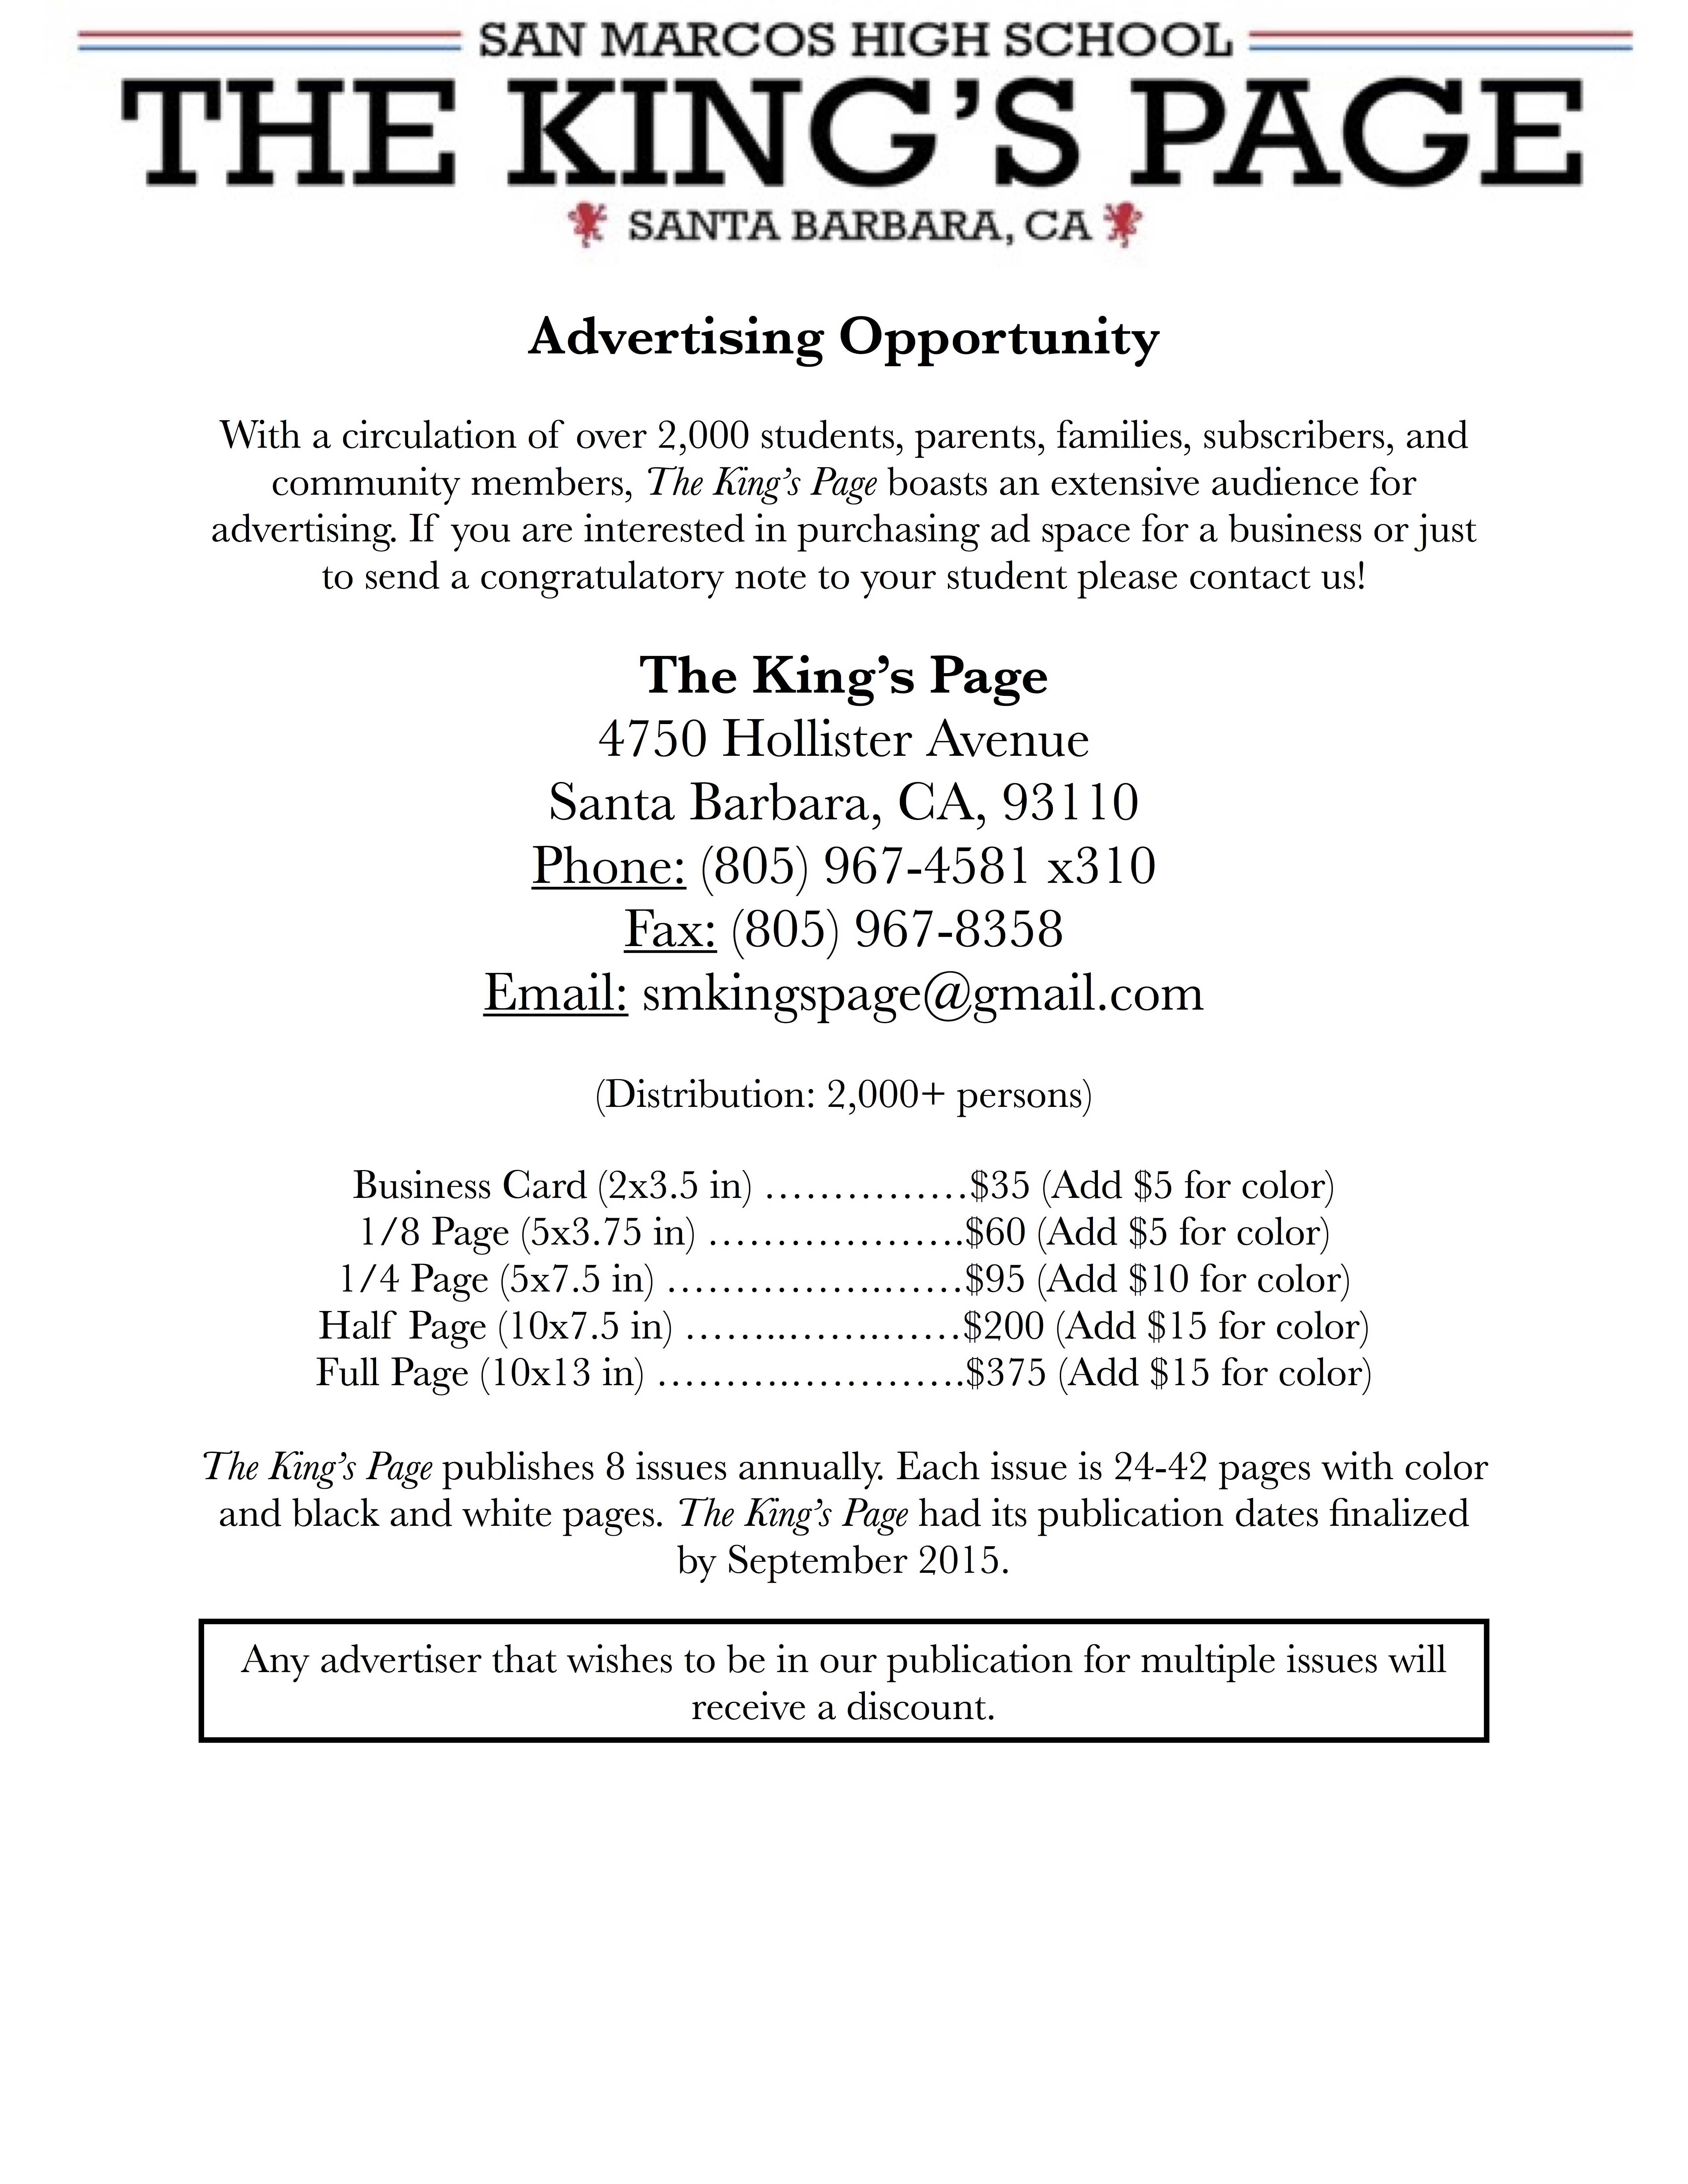 Advertising Opportunity2